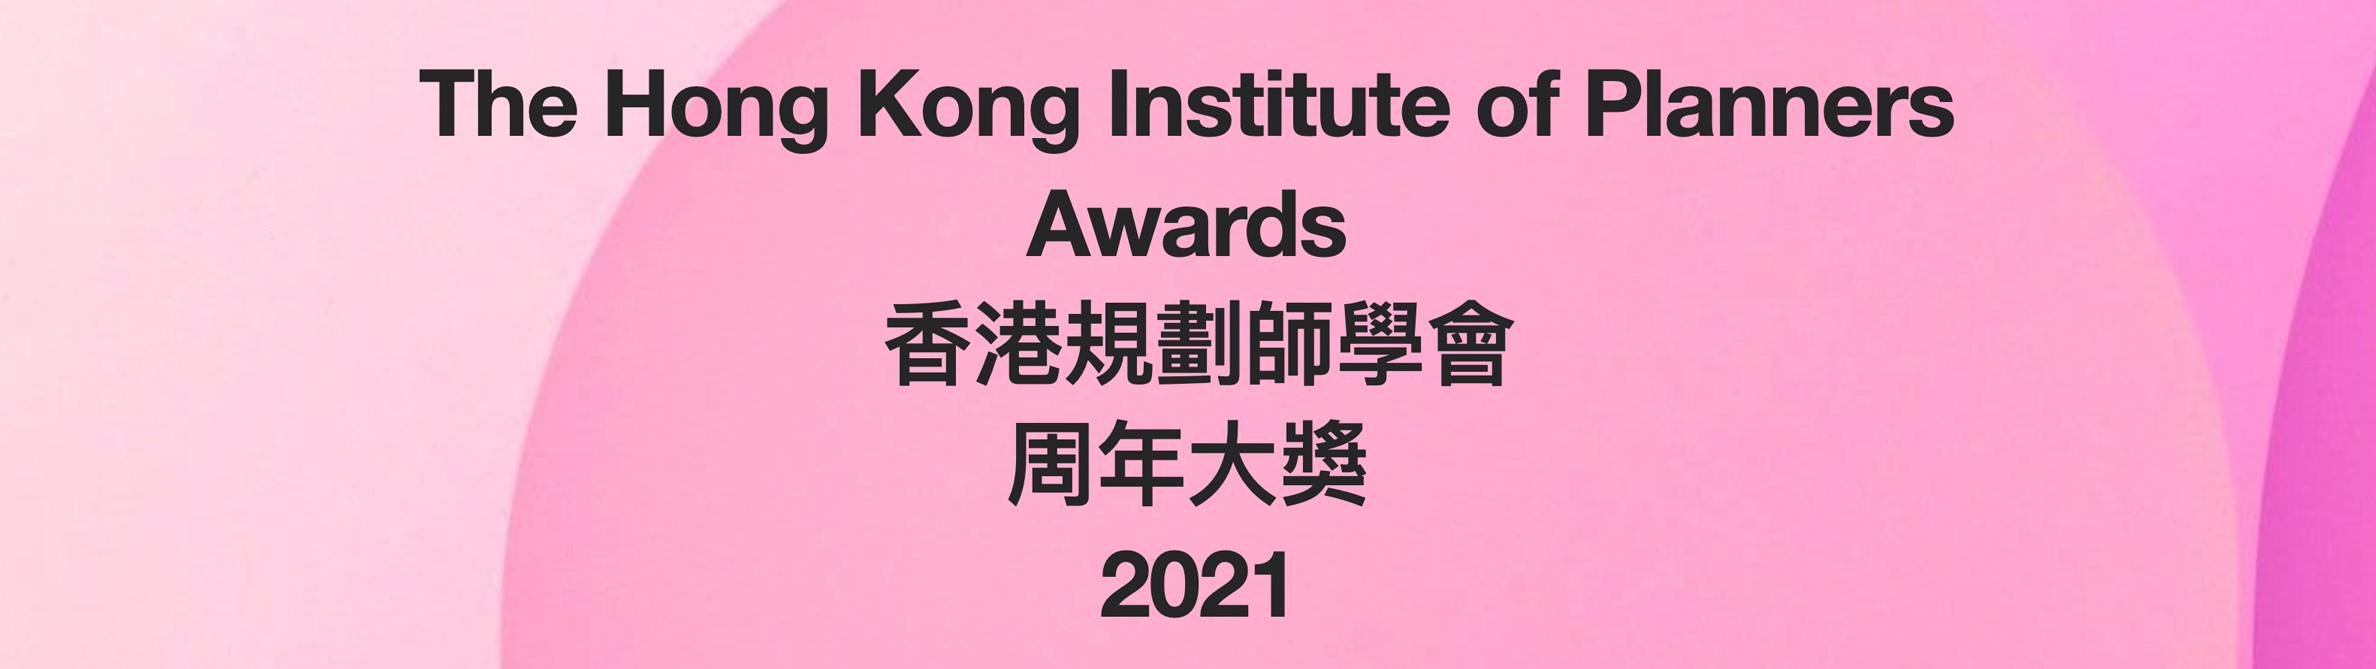 HKIP Awards 2021 Award Presentation/Awardees Sharing and Walking Tours Registration